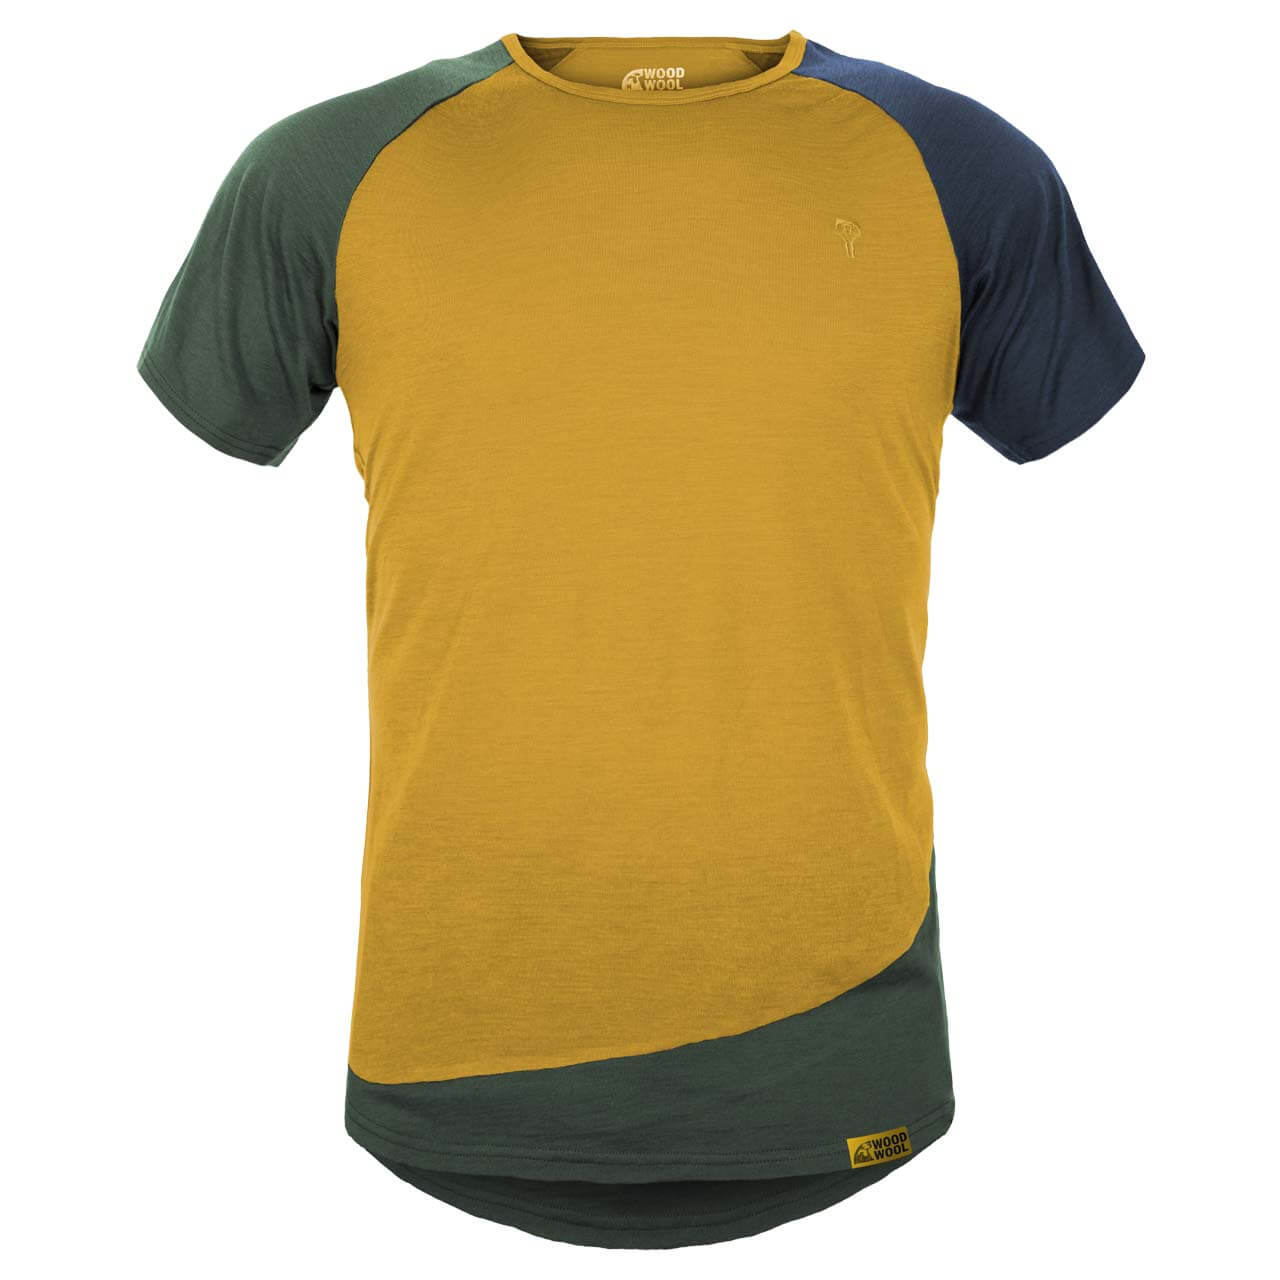 Grüezi Bag WoodWool T-Shirt Mr. Kirk - Daisy Daze Yellow, M